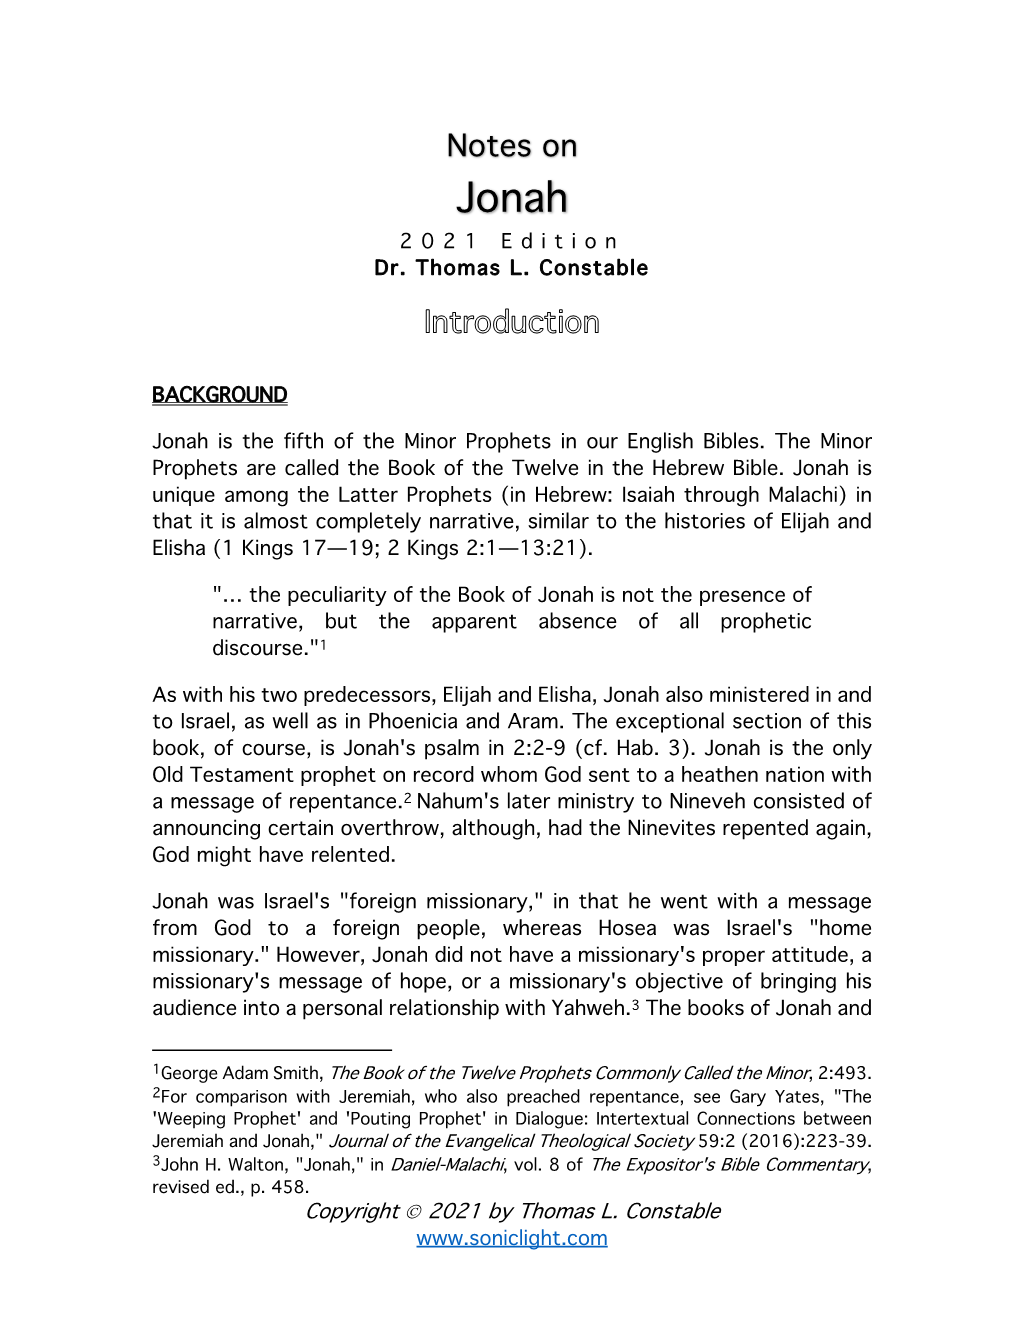 Jonah 202 1 Edition Dr